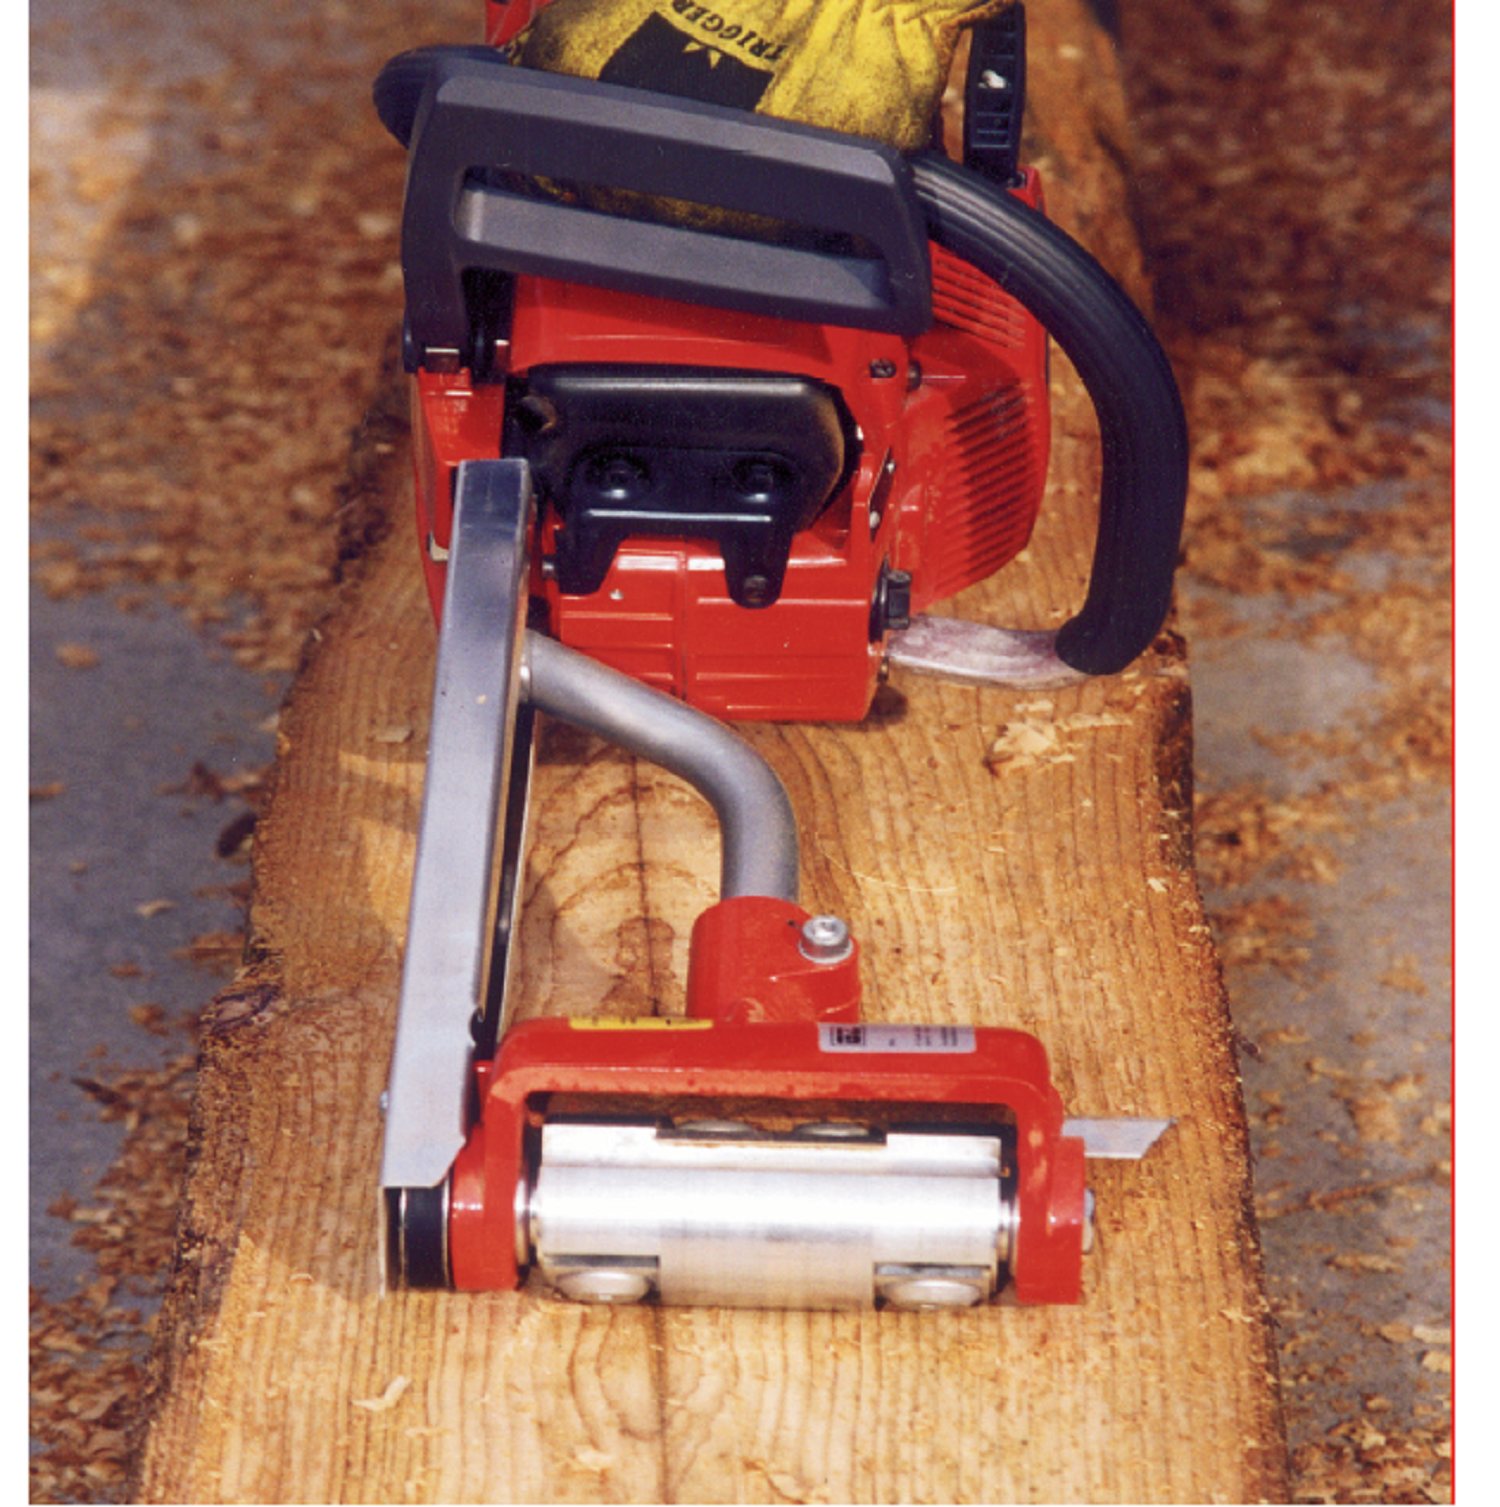 Log cutters and log peelers